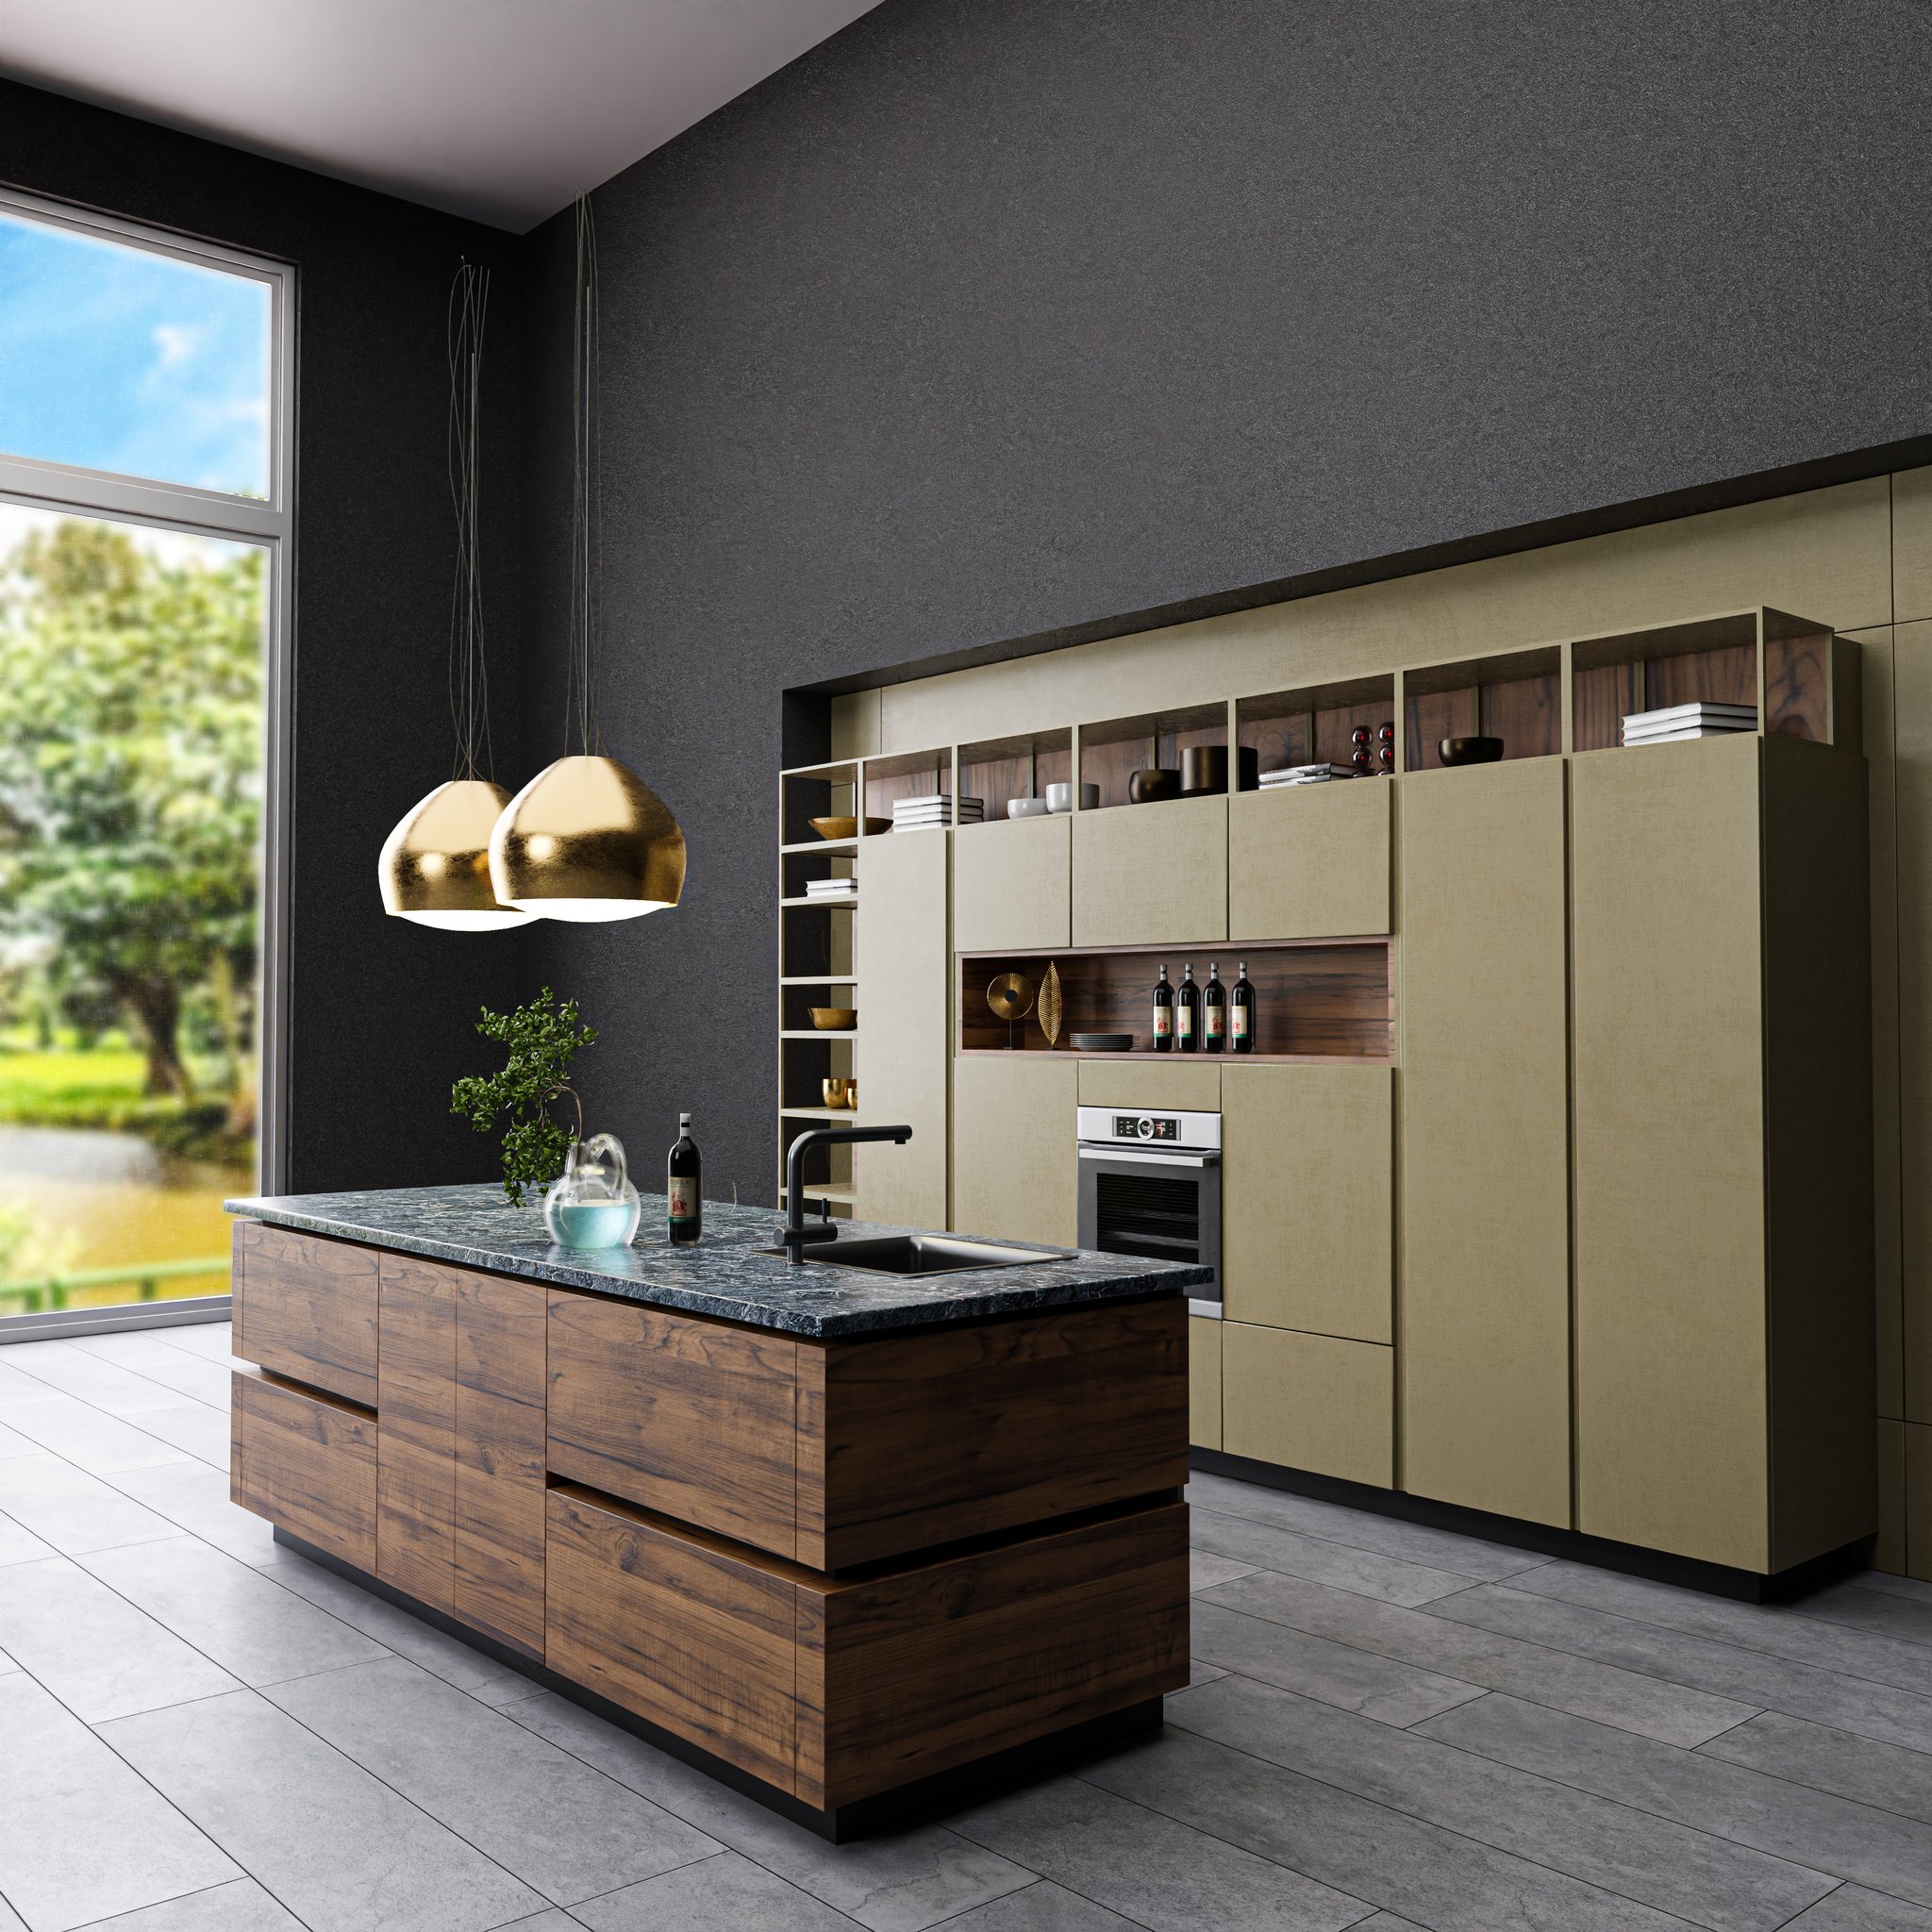 Kitchen scene01 | 3D Interior scenes | BlenderKit